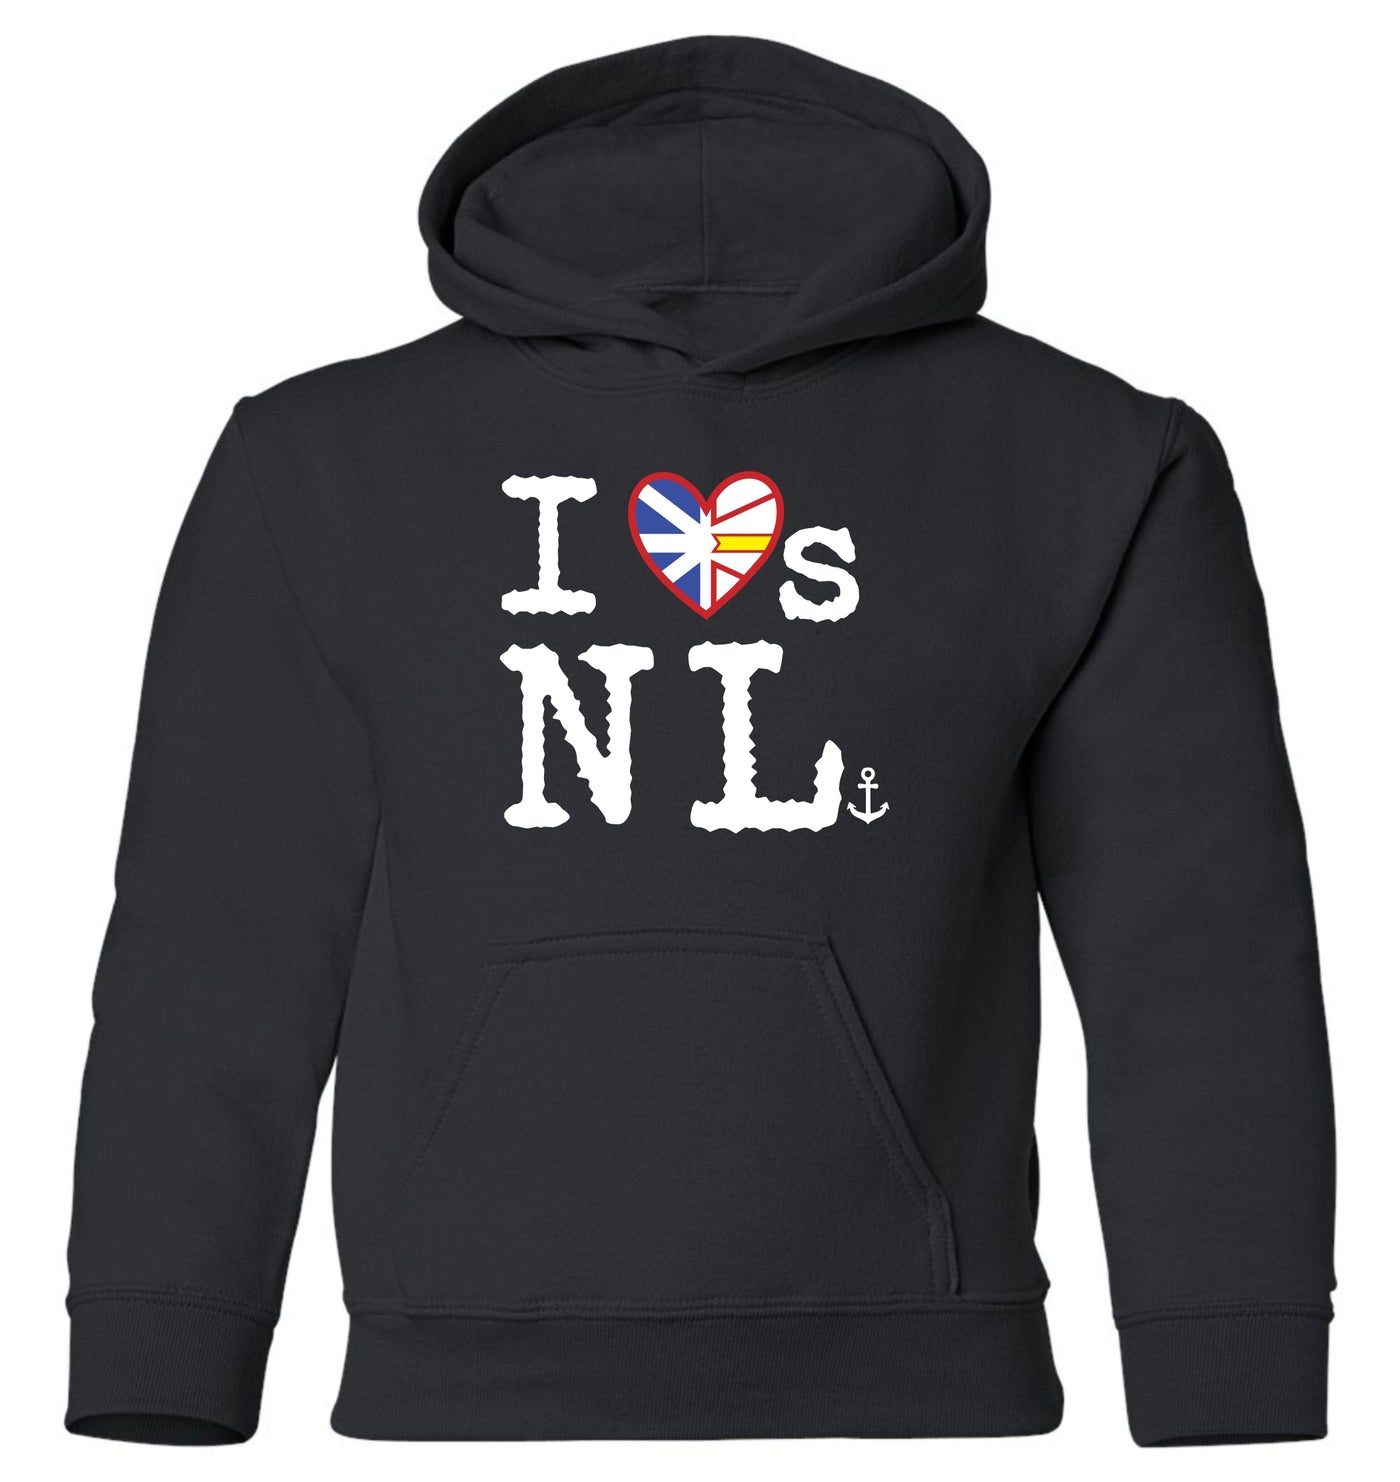 "I Loves NL" Flag Heart Youth Hoodie